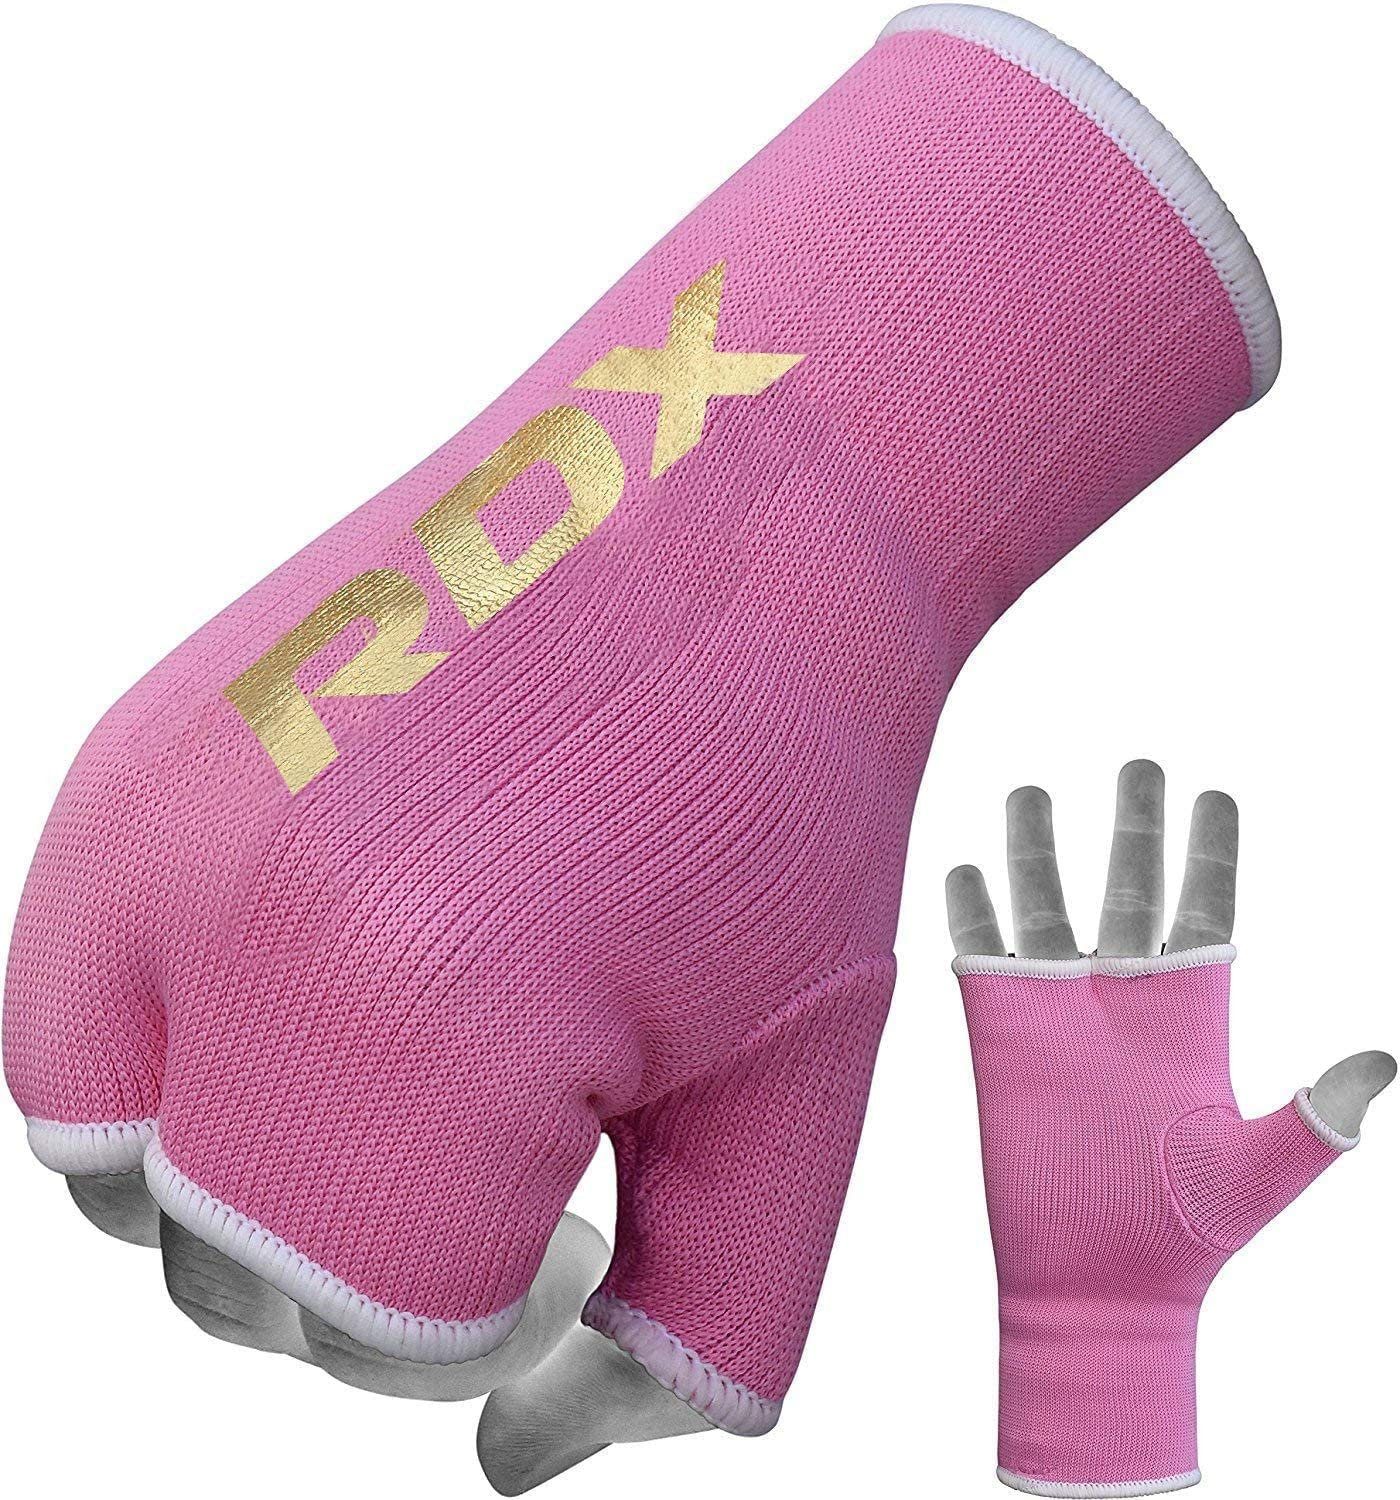 Hand Boxbandagen PINK Innere RDX Handschuhe RDX Wraps Sparring Sports Boxen Training, Boxbandagen